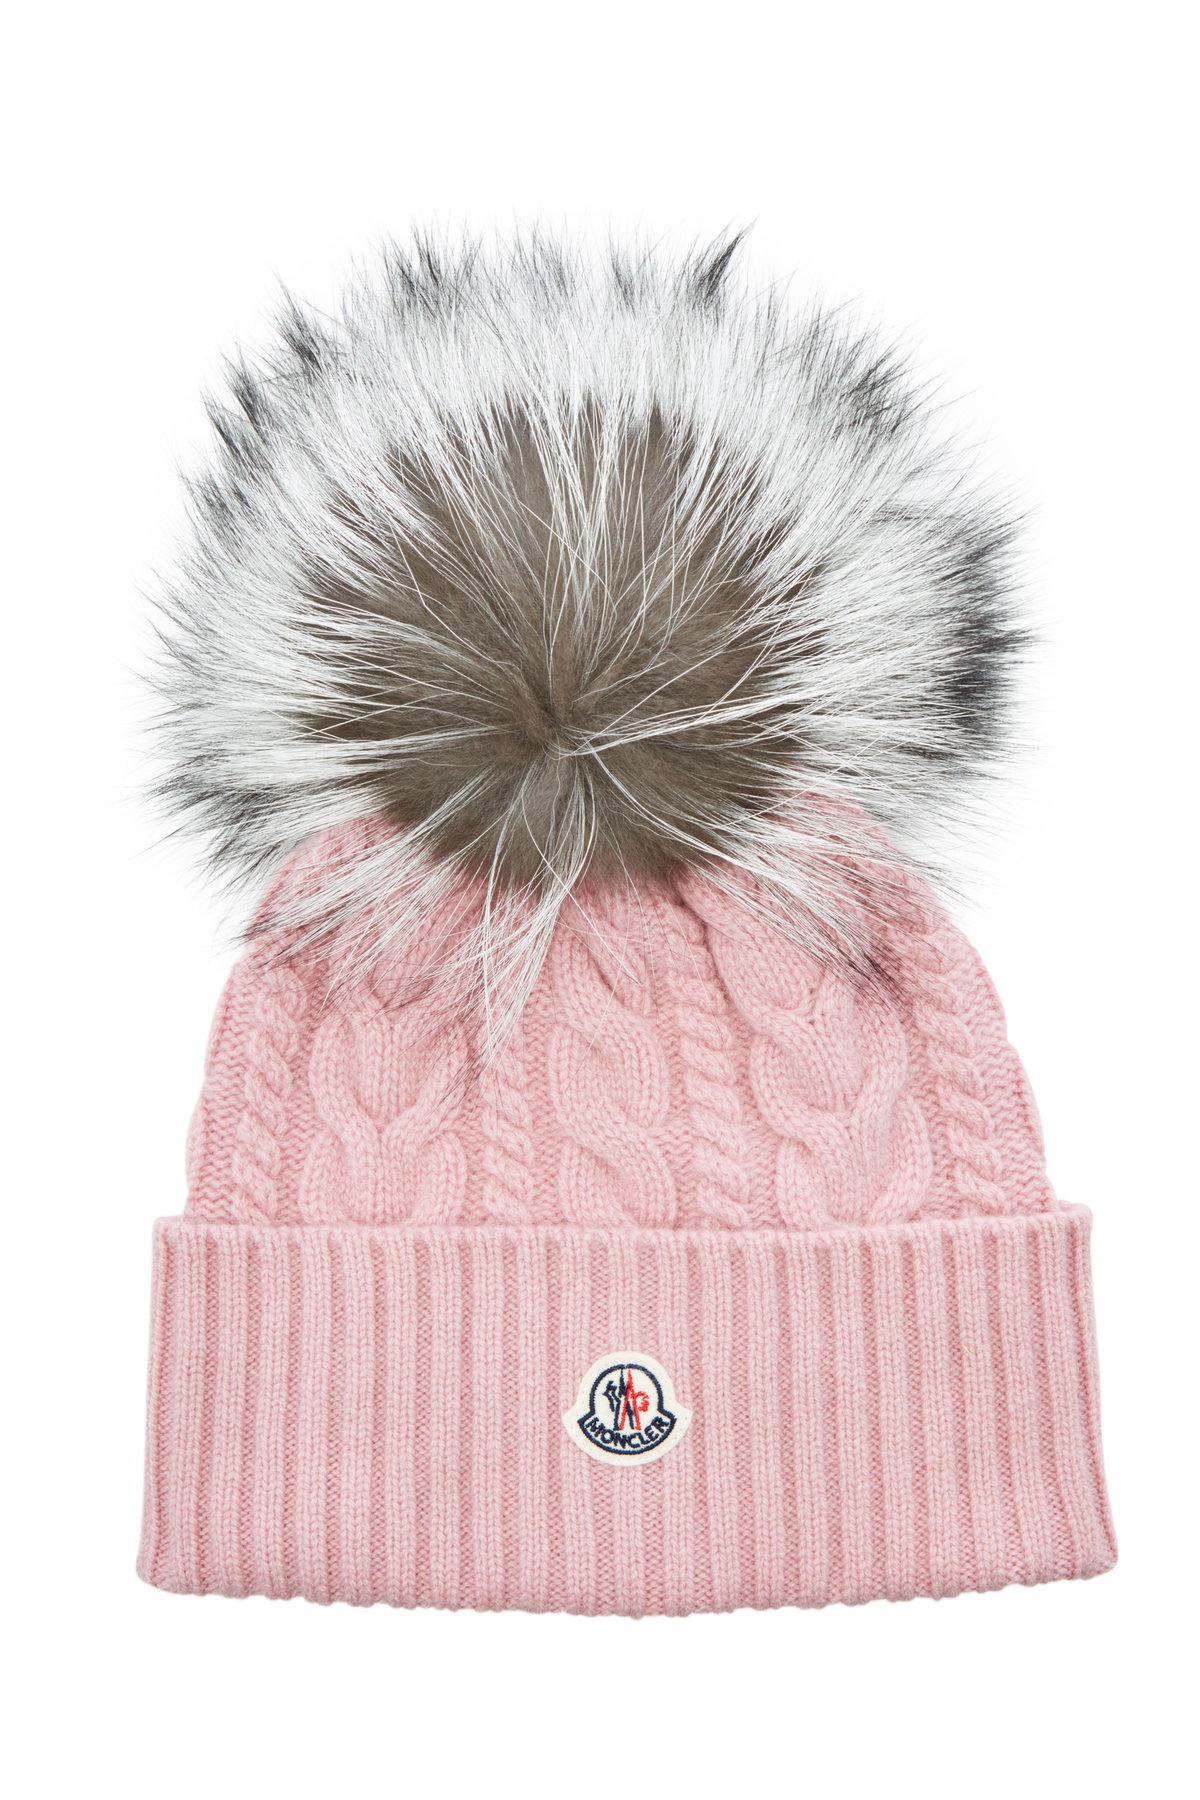 moncler hat pink